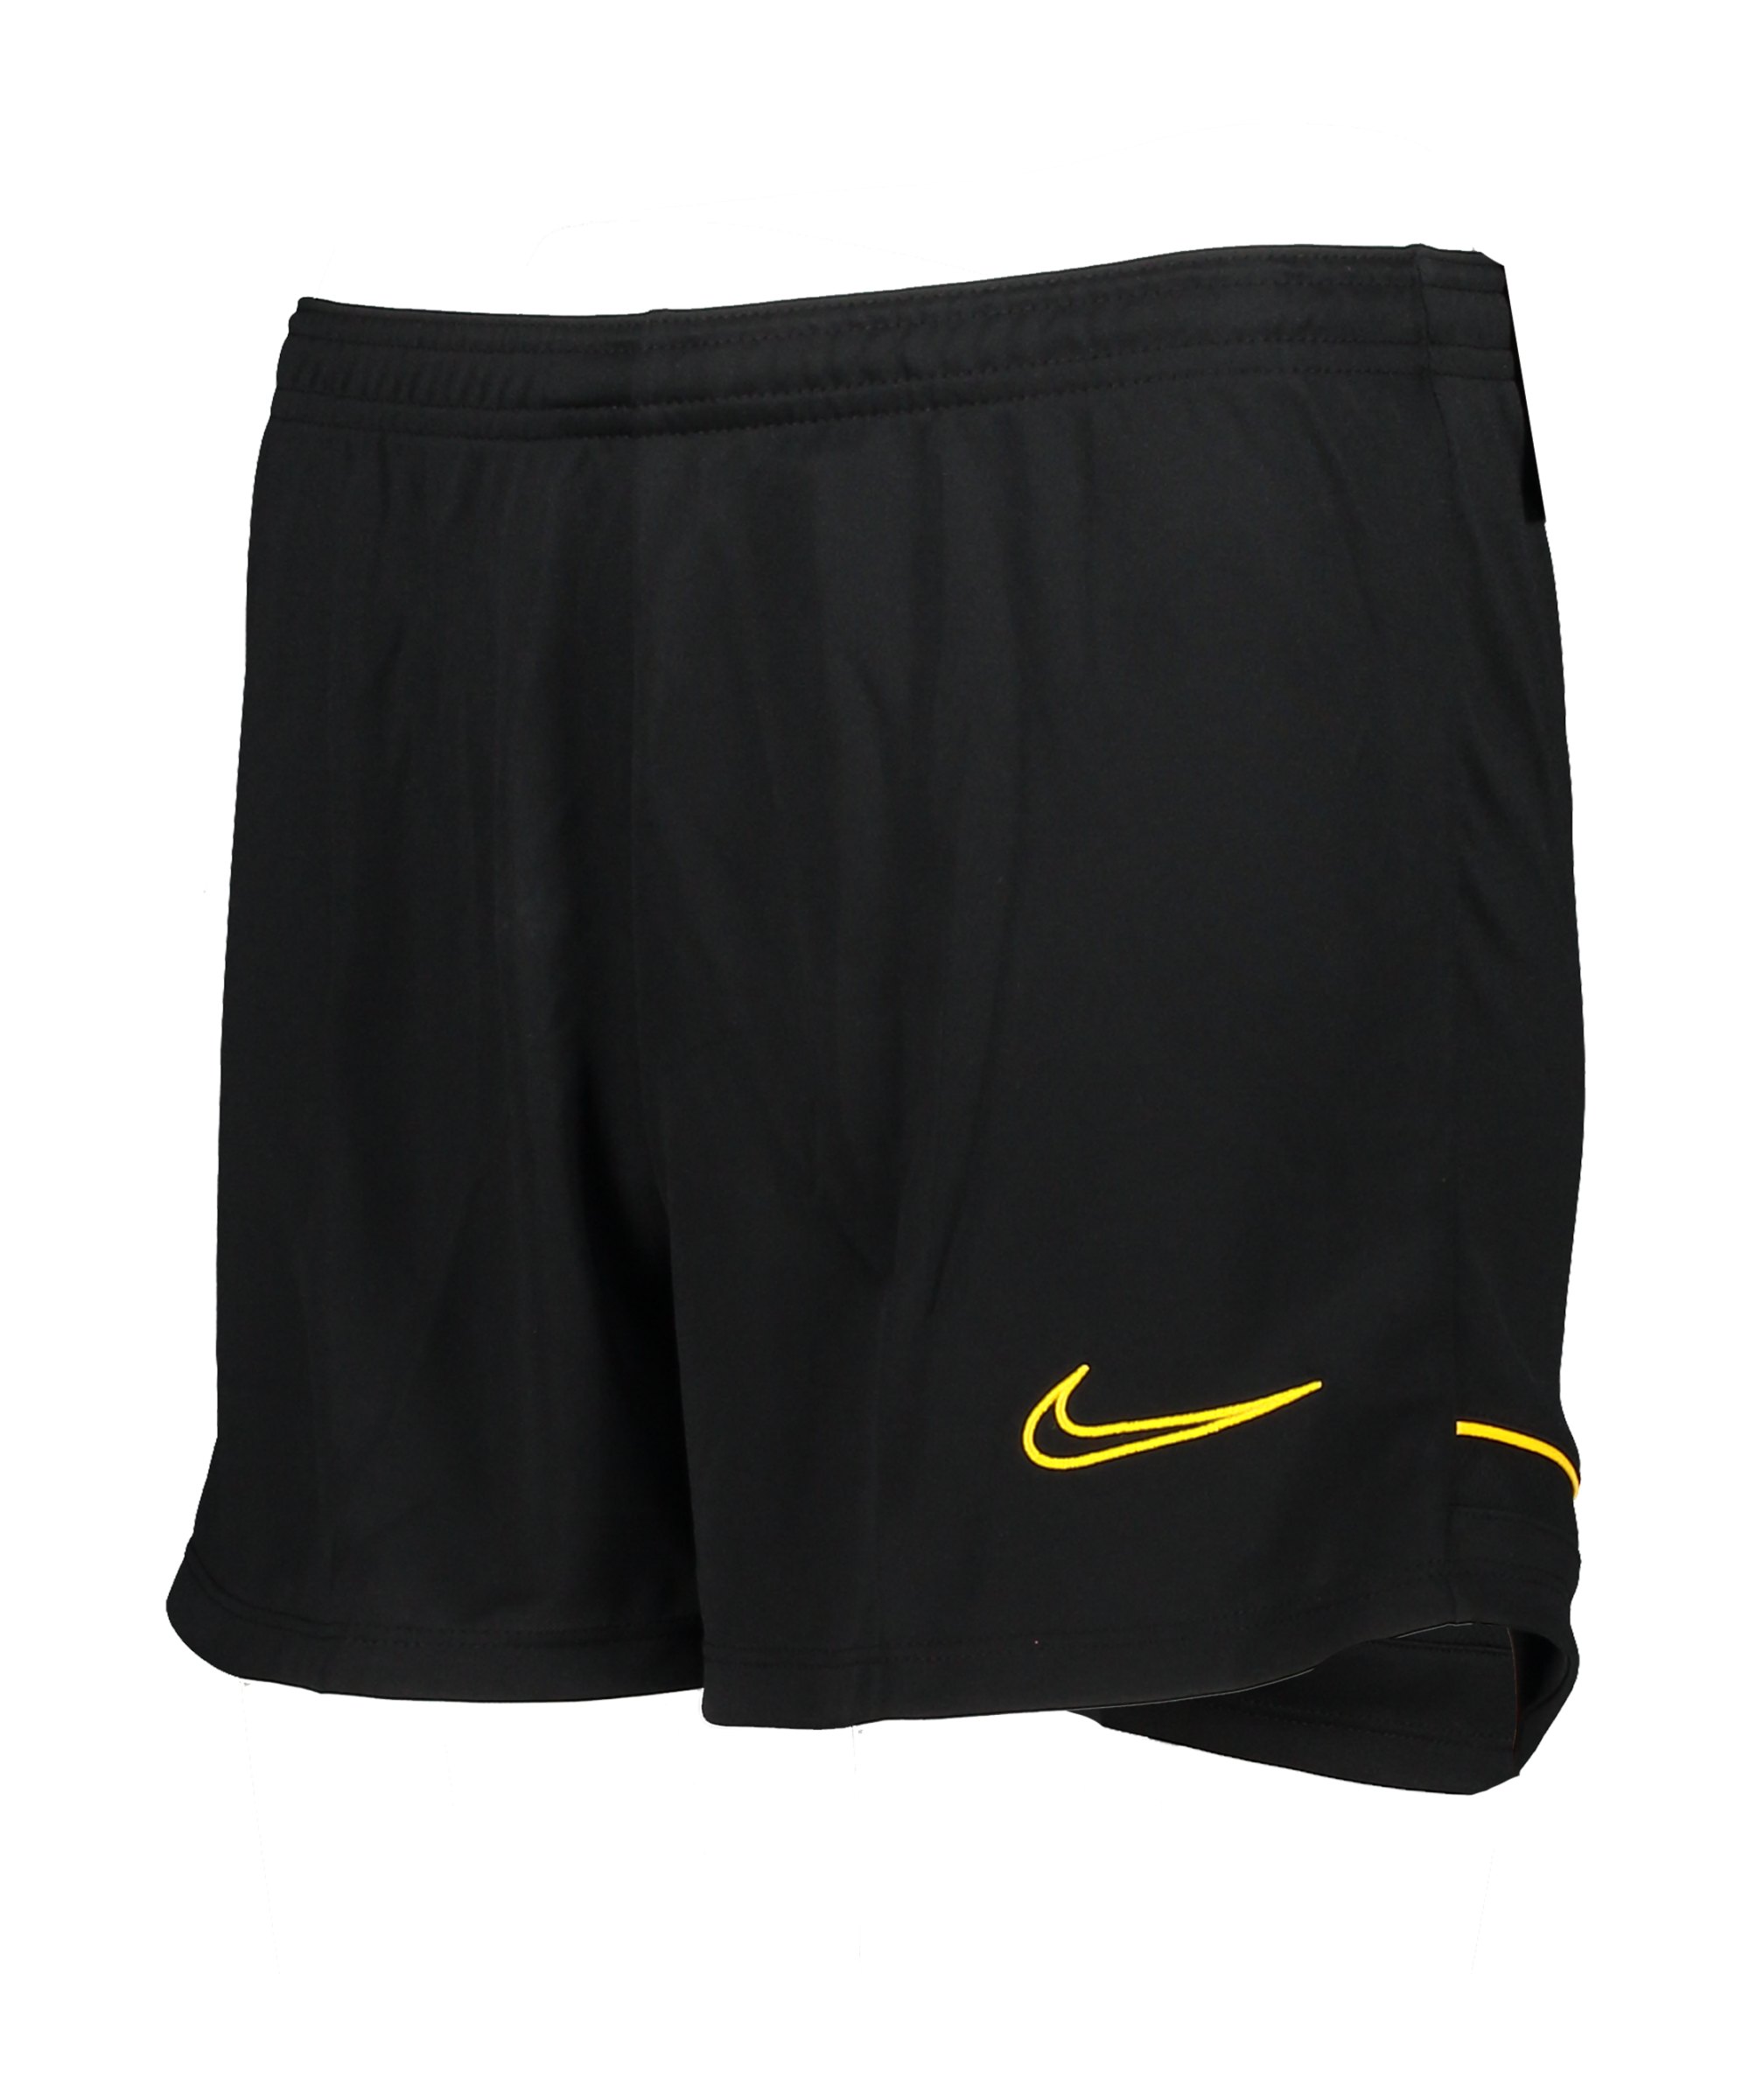 Nike Academy 21 Short Damen Schwarz Orange F014 - schwarz